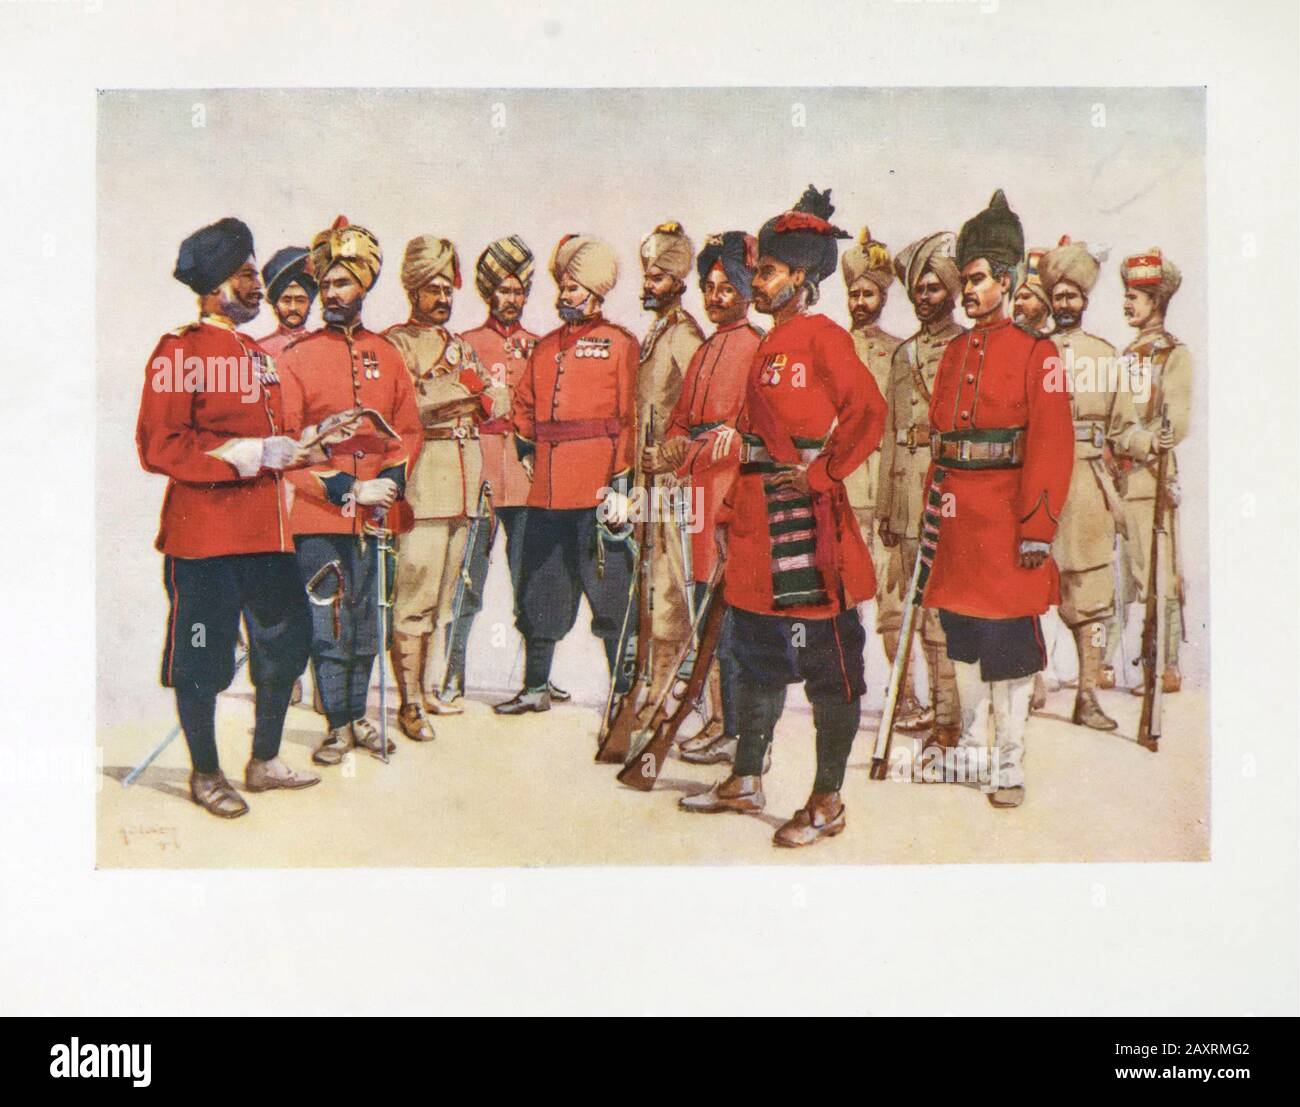 Armies of India. By major A.C. Lovett. London. 1911. Punjab Regiments 24th Punjbis, 67th Punjabis (back), 29th Punjabis, 21st Punjabis, 25th Punjabis Stock Photo